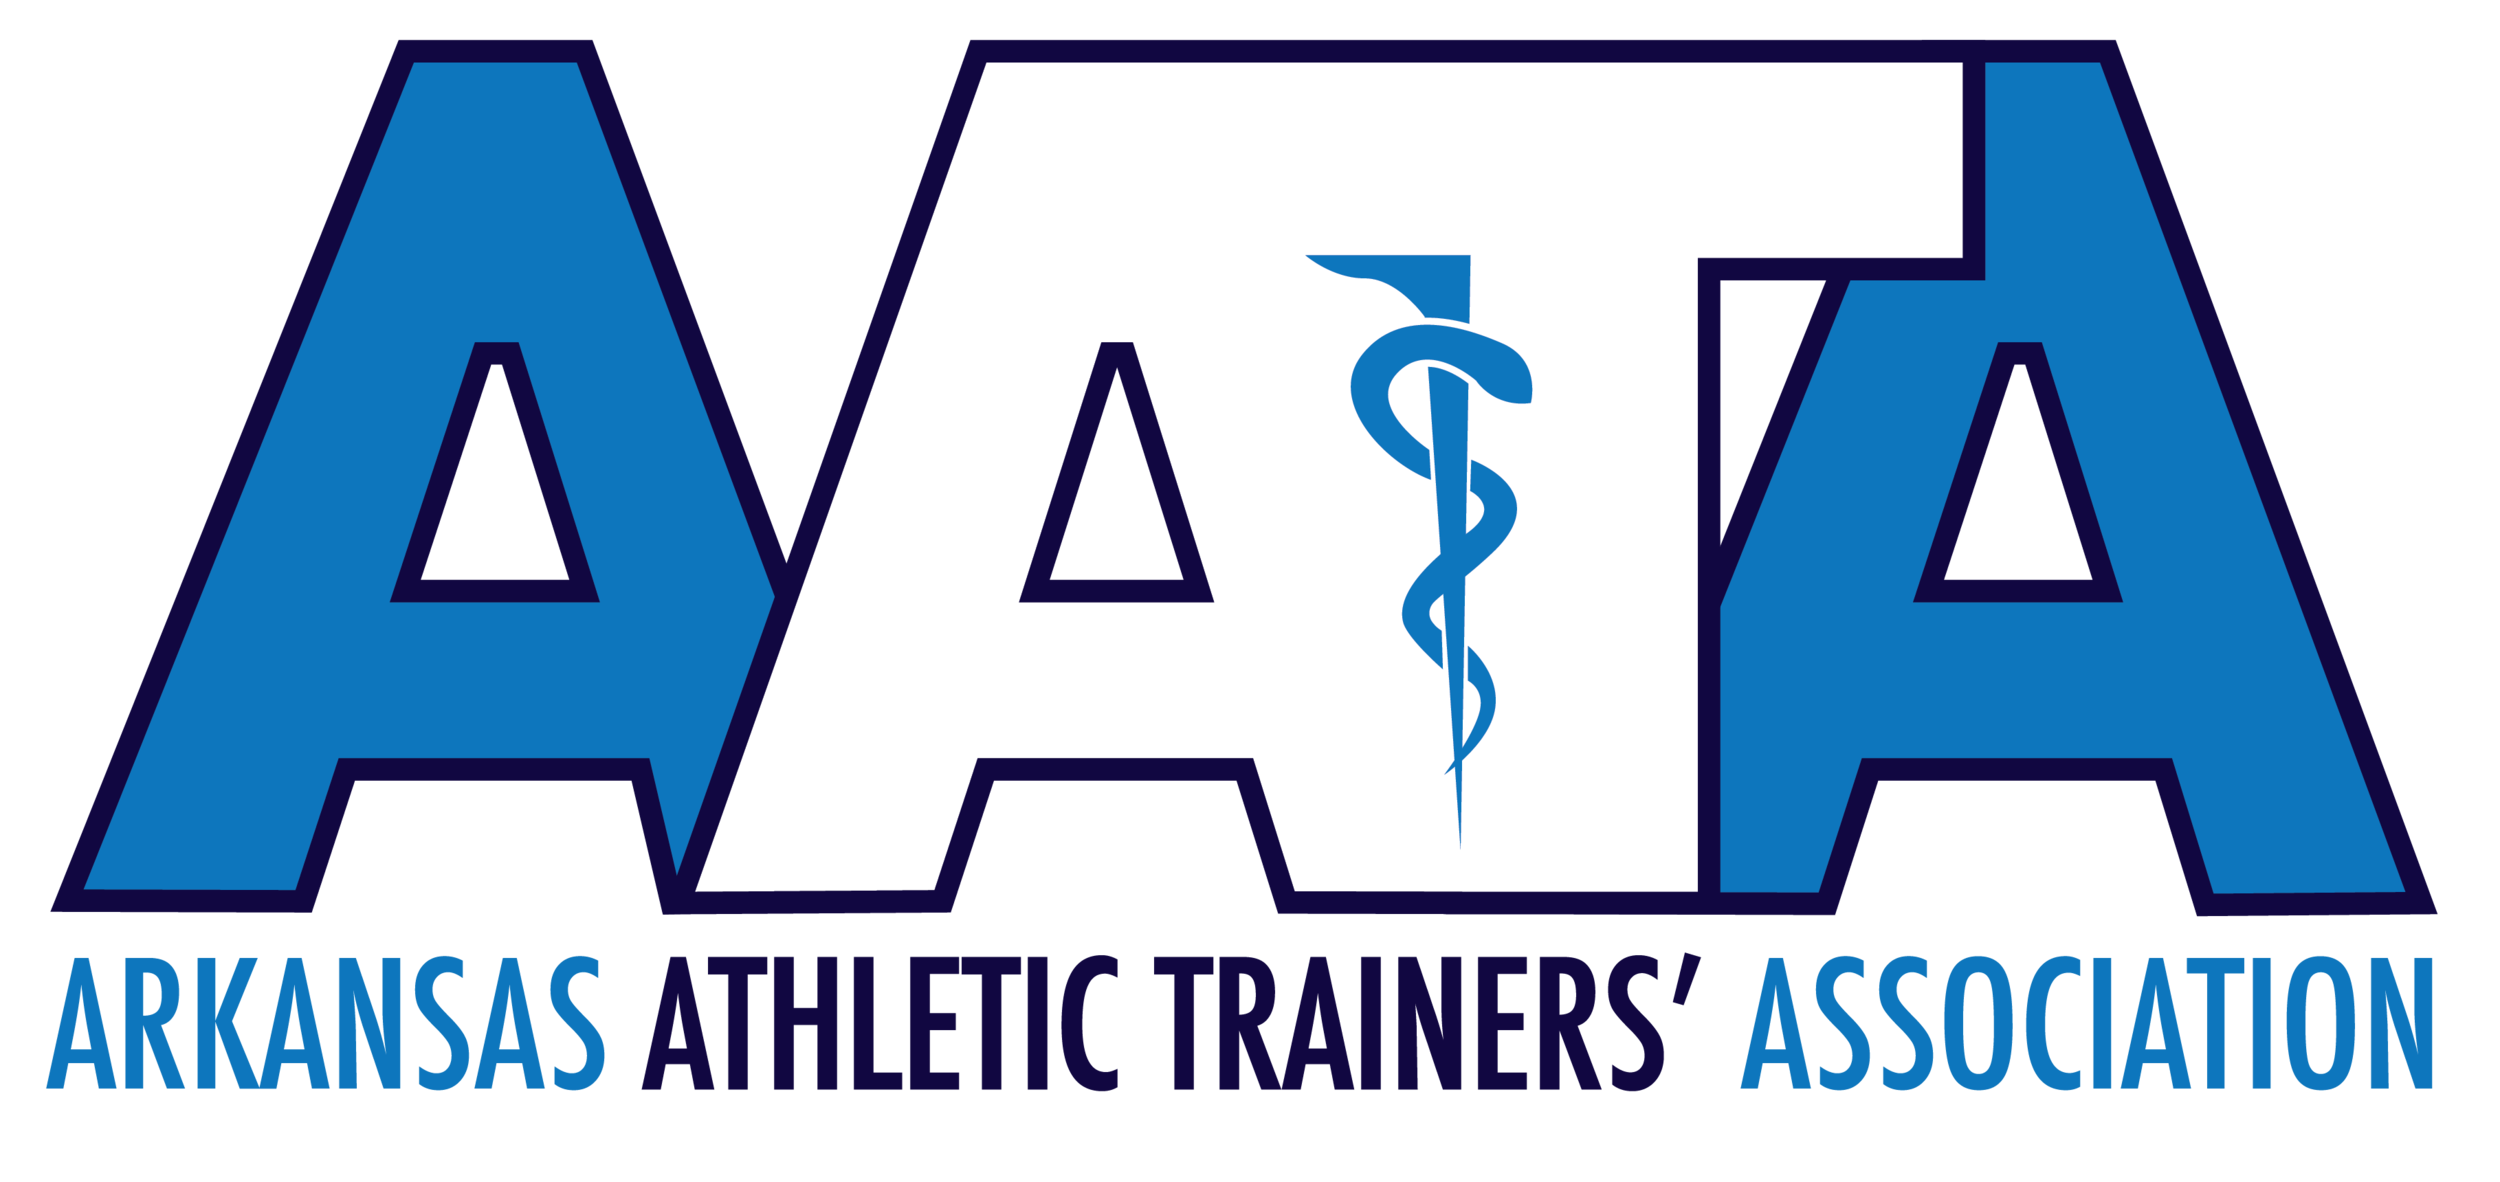 Arkansas Athletic Trainers' Association Logo